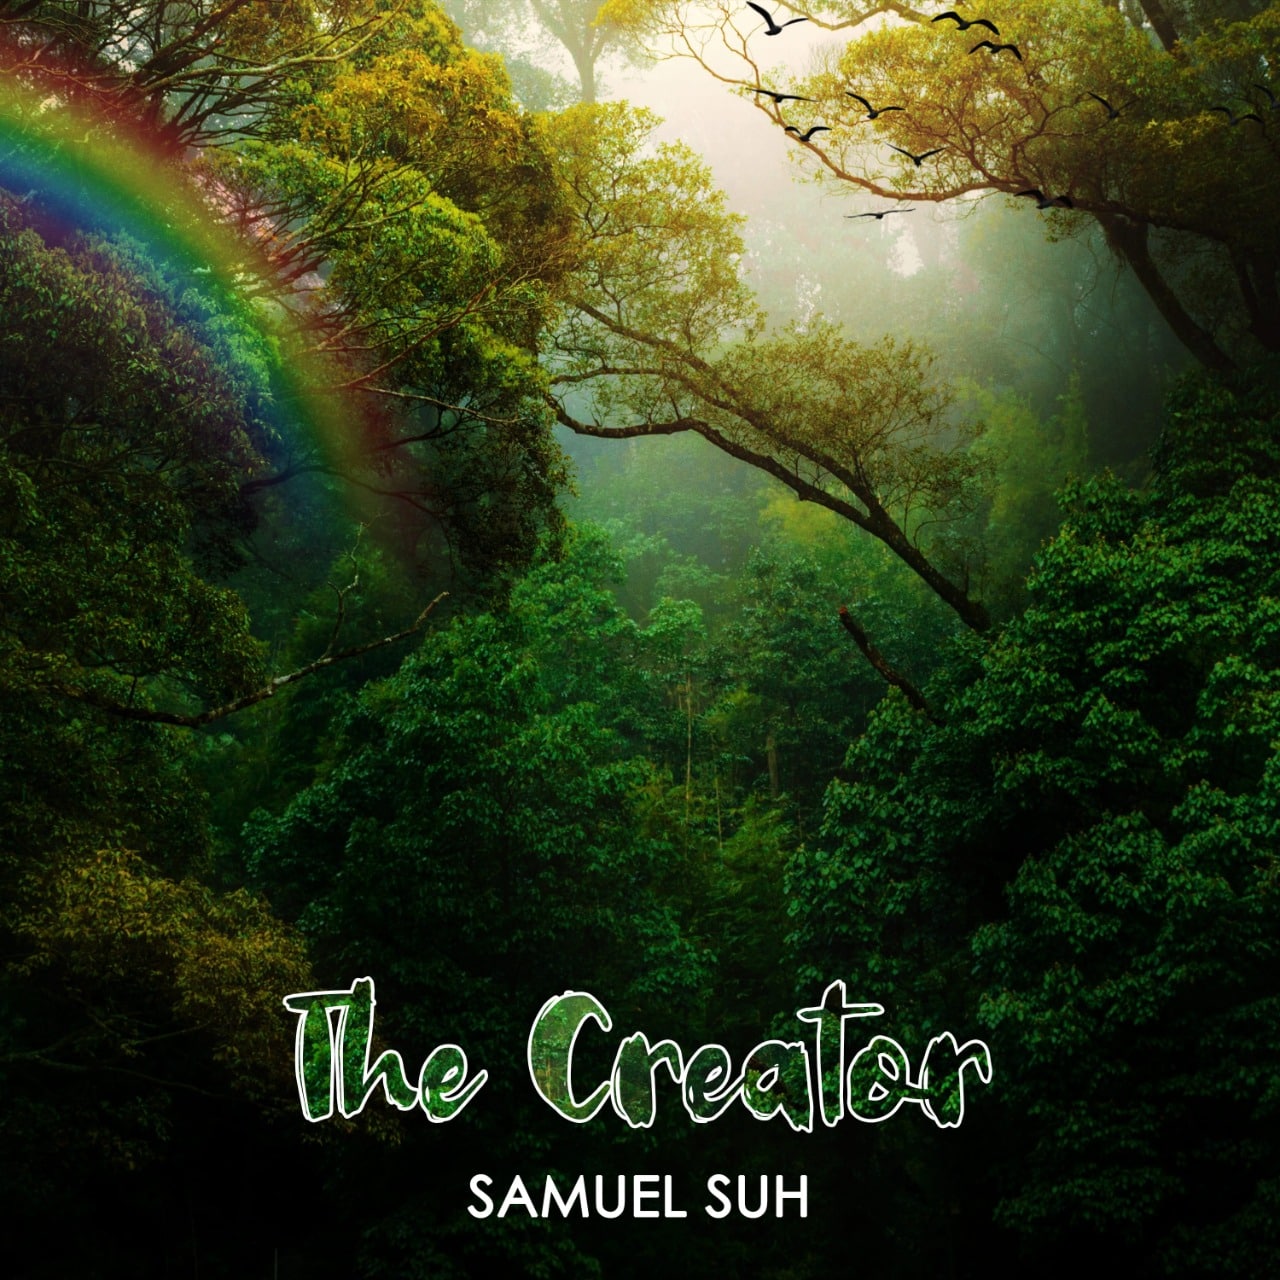 The Creator by Samuel Suh